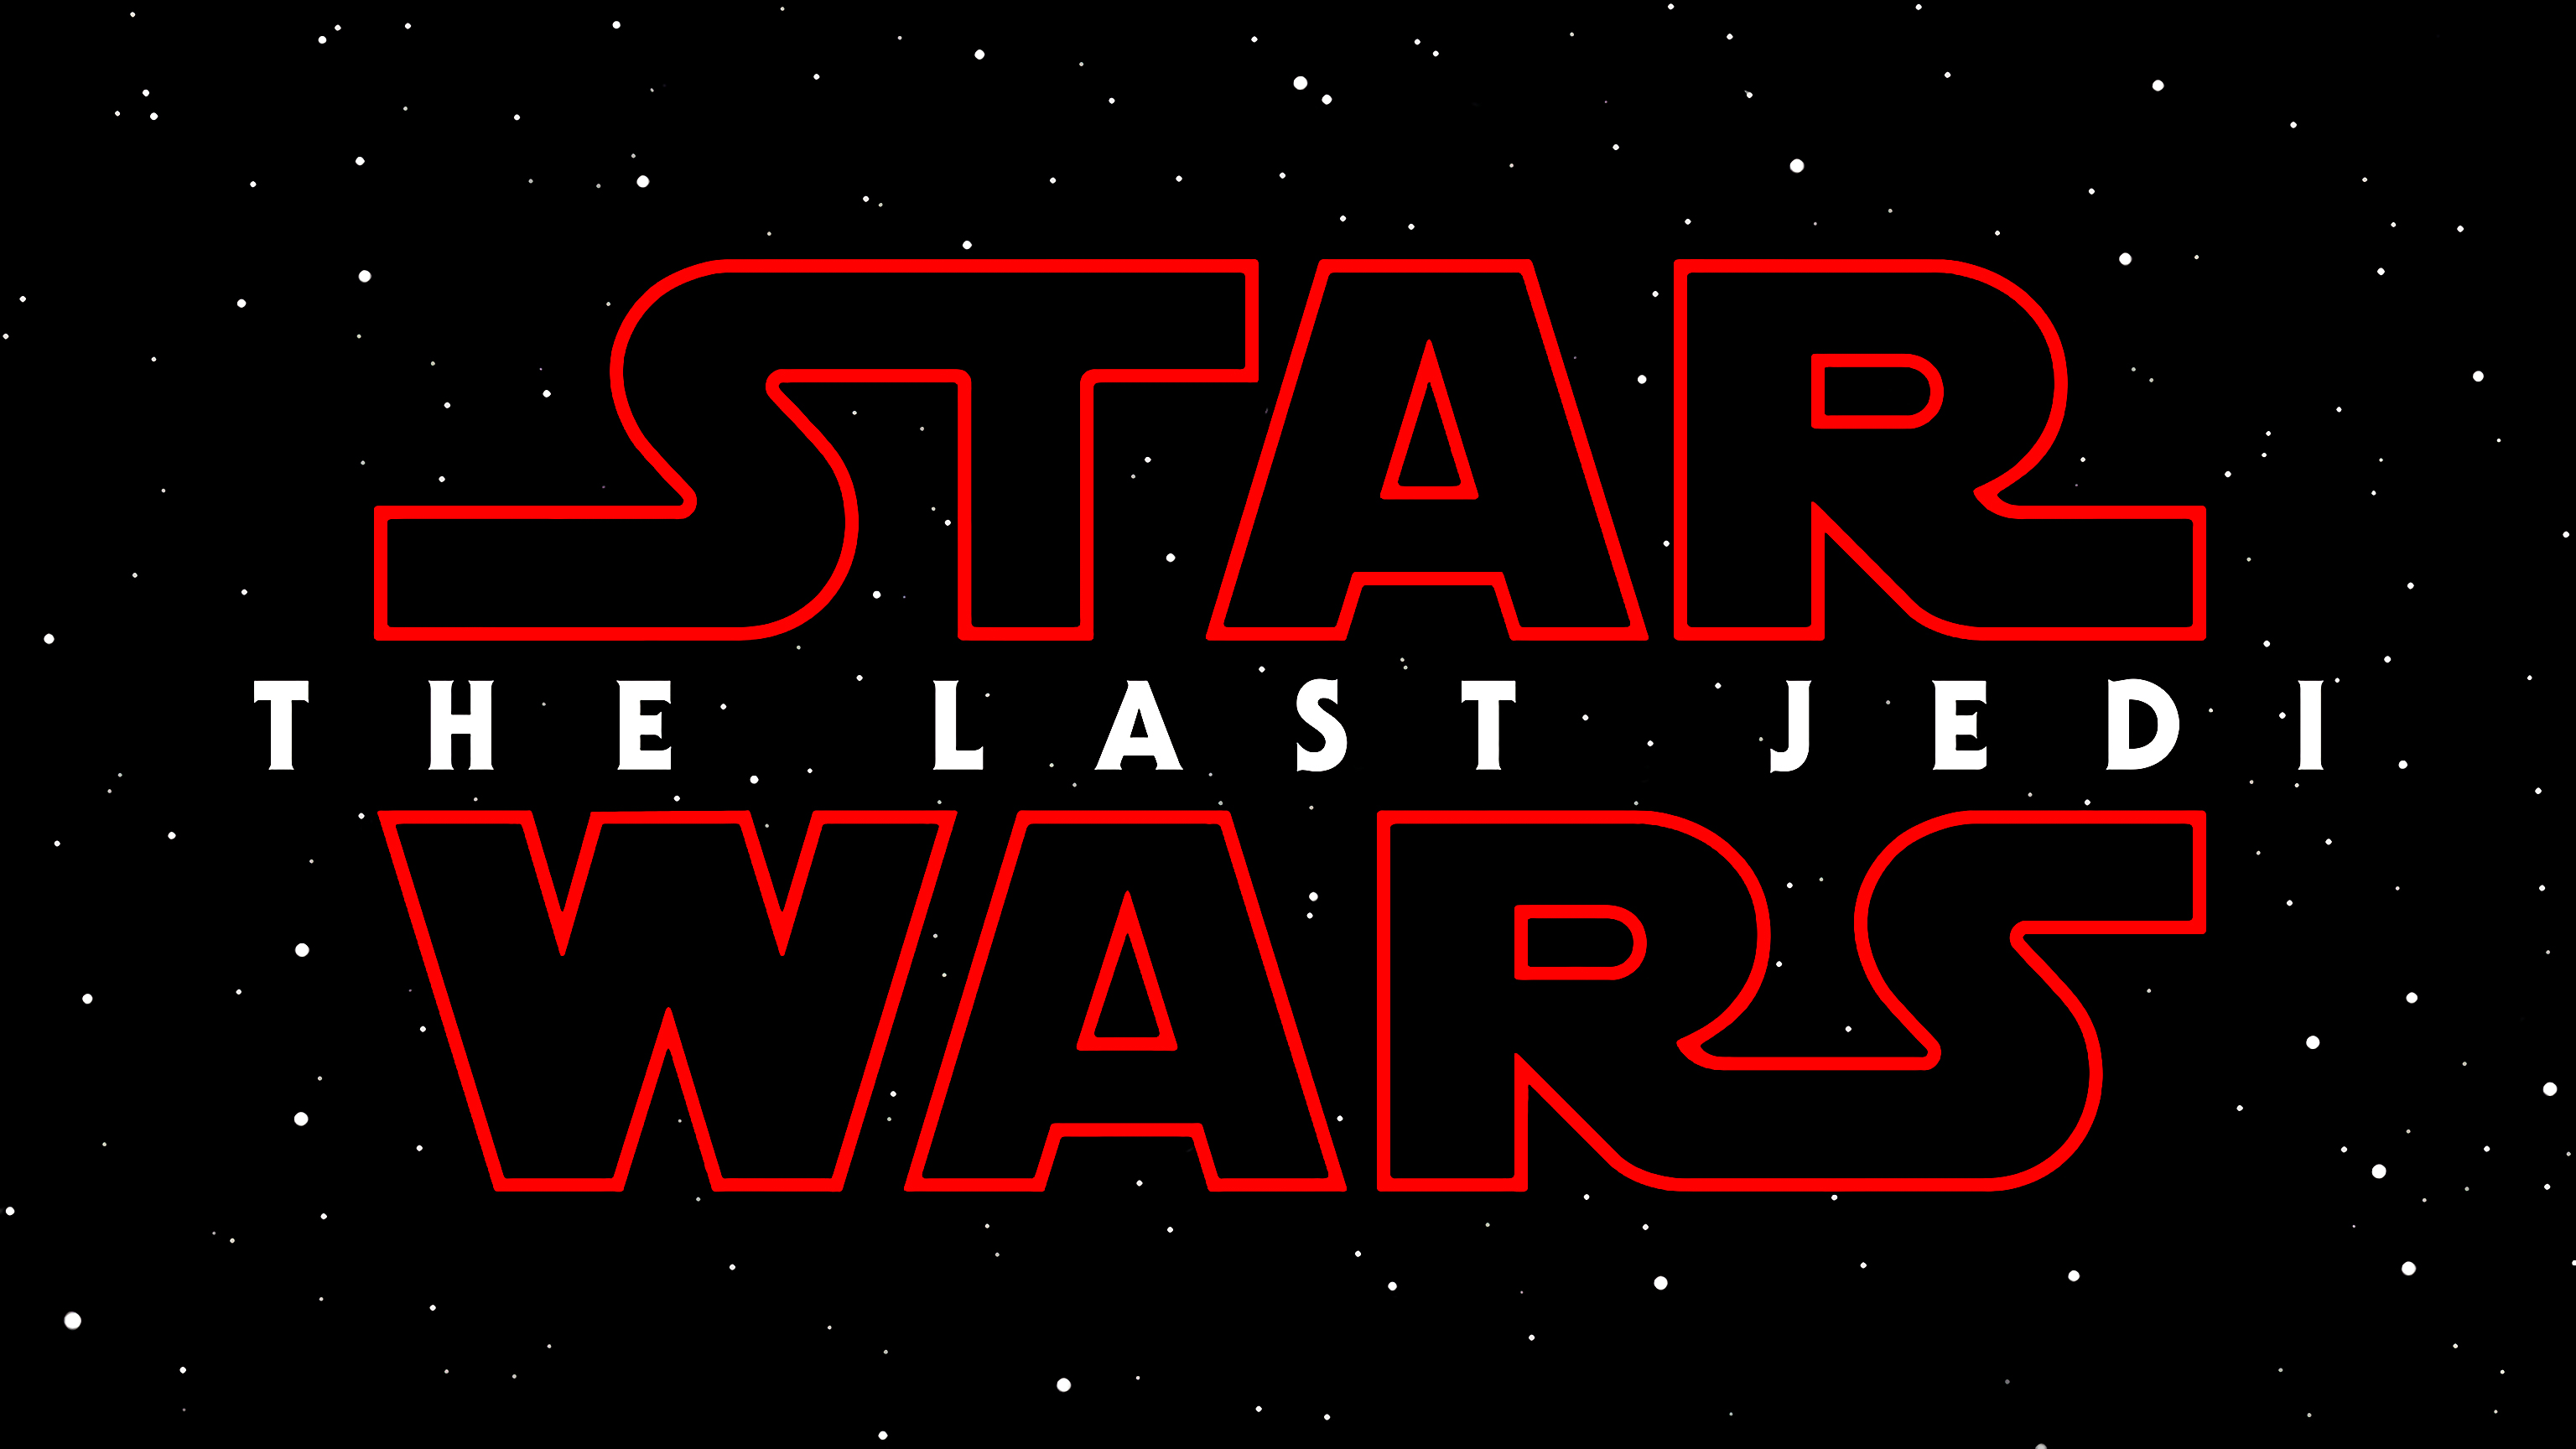 movie, star wars: the last jedi, logo, star wars